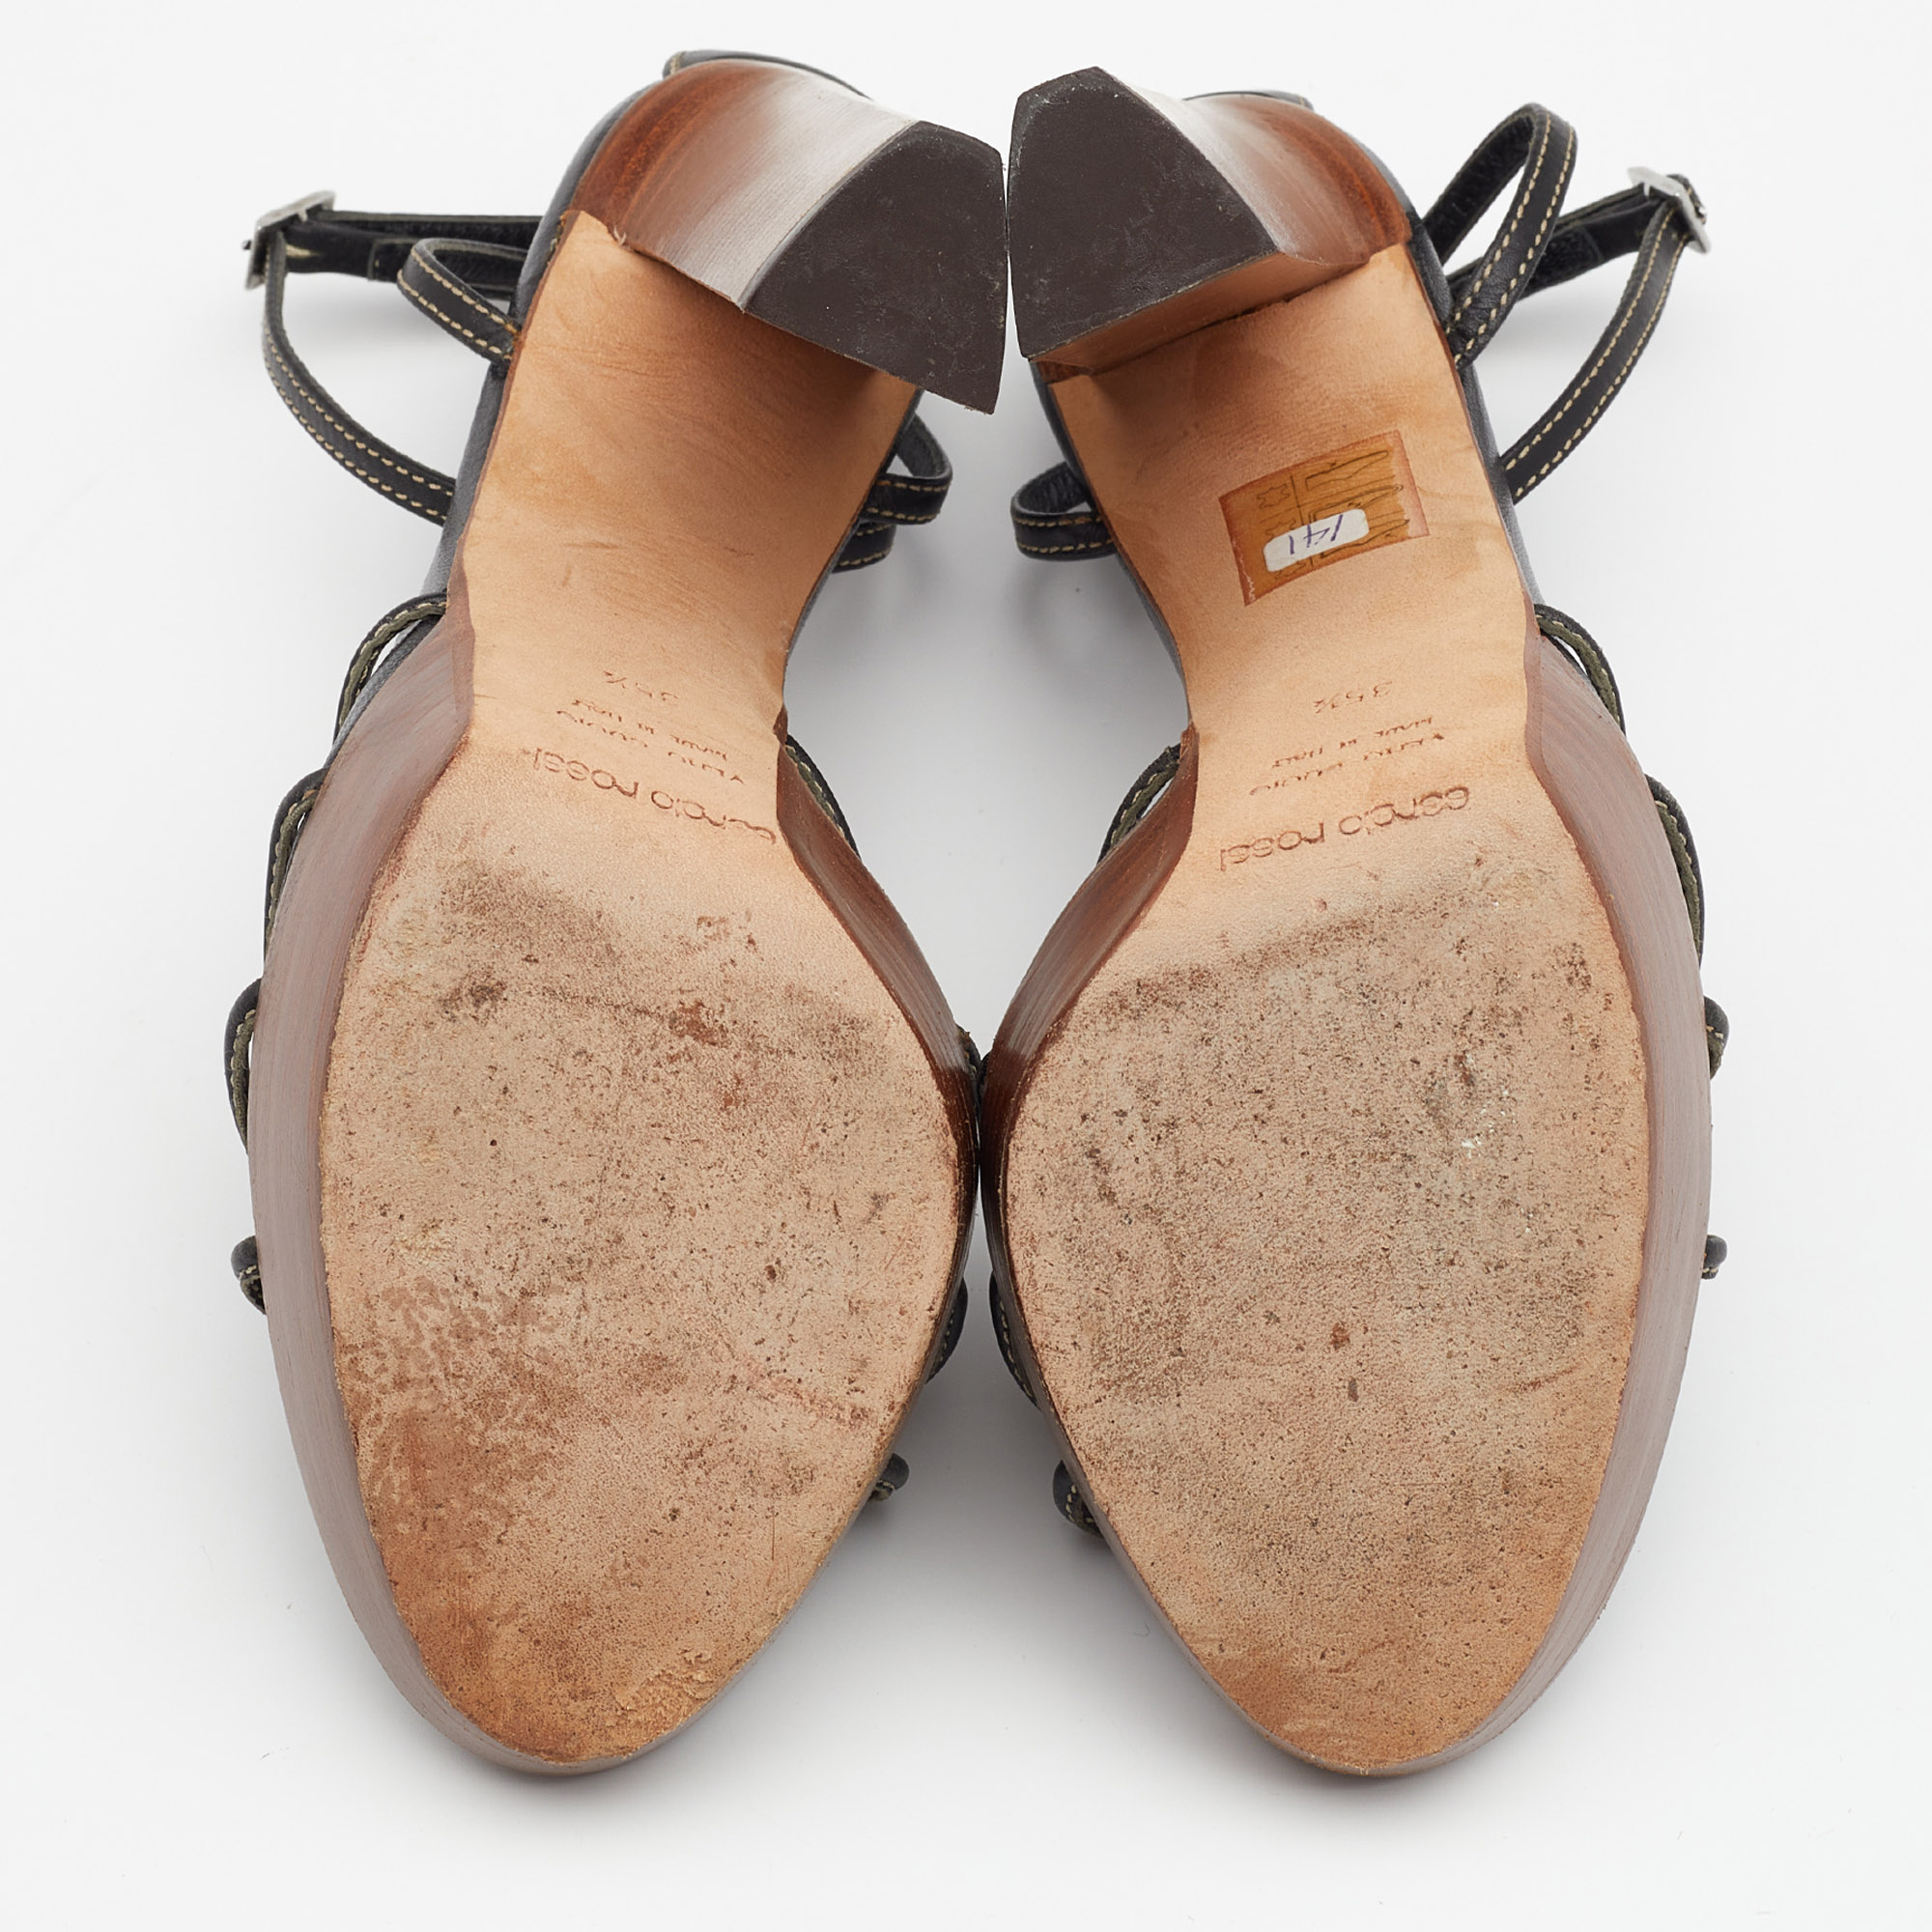 Sergio Rossi Black Leather Ankle Strap Platform Sandals Size 35.5